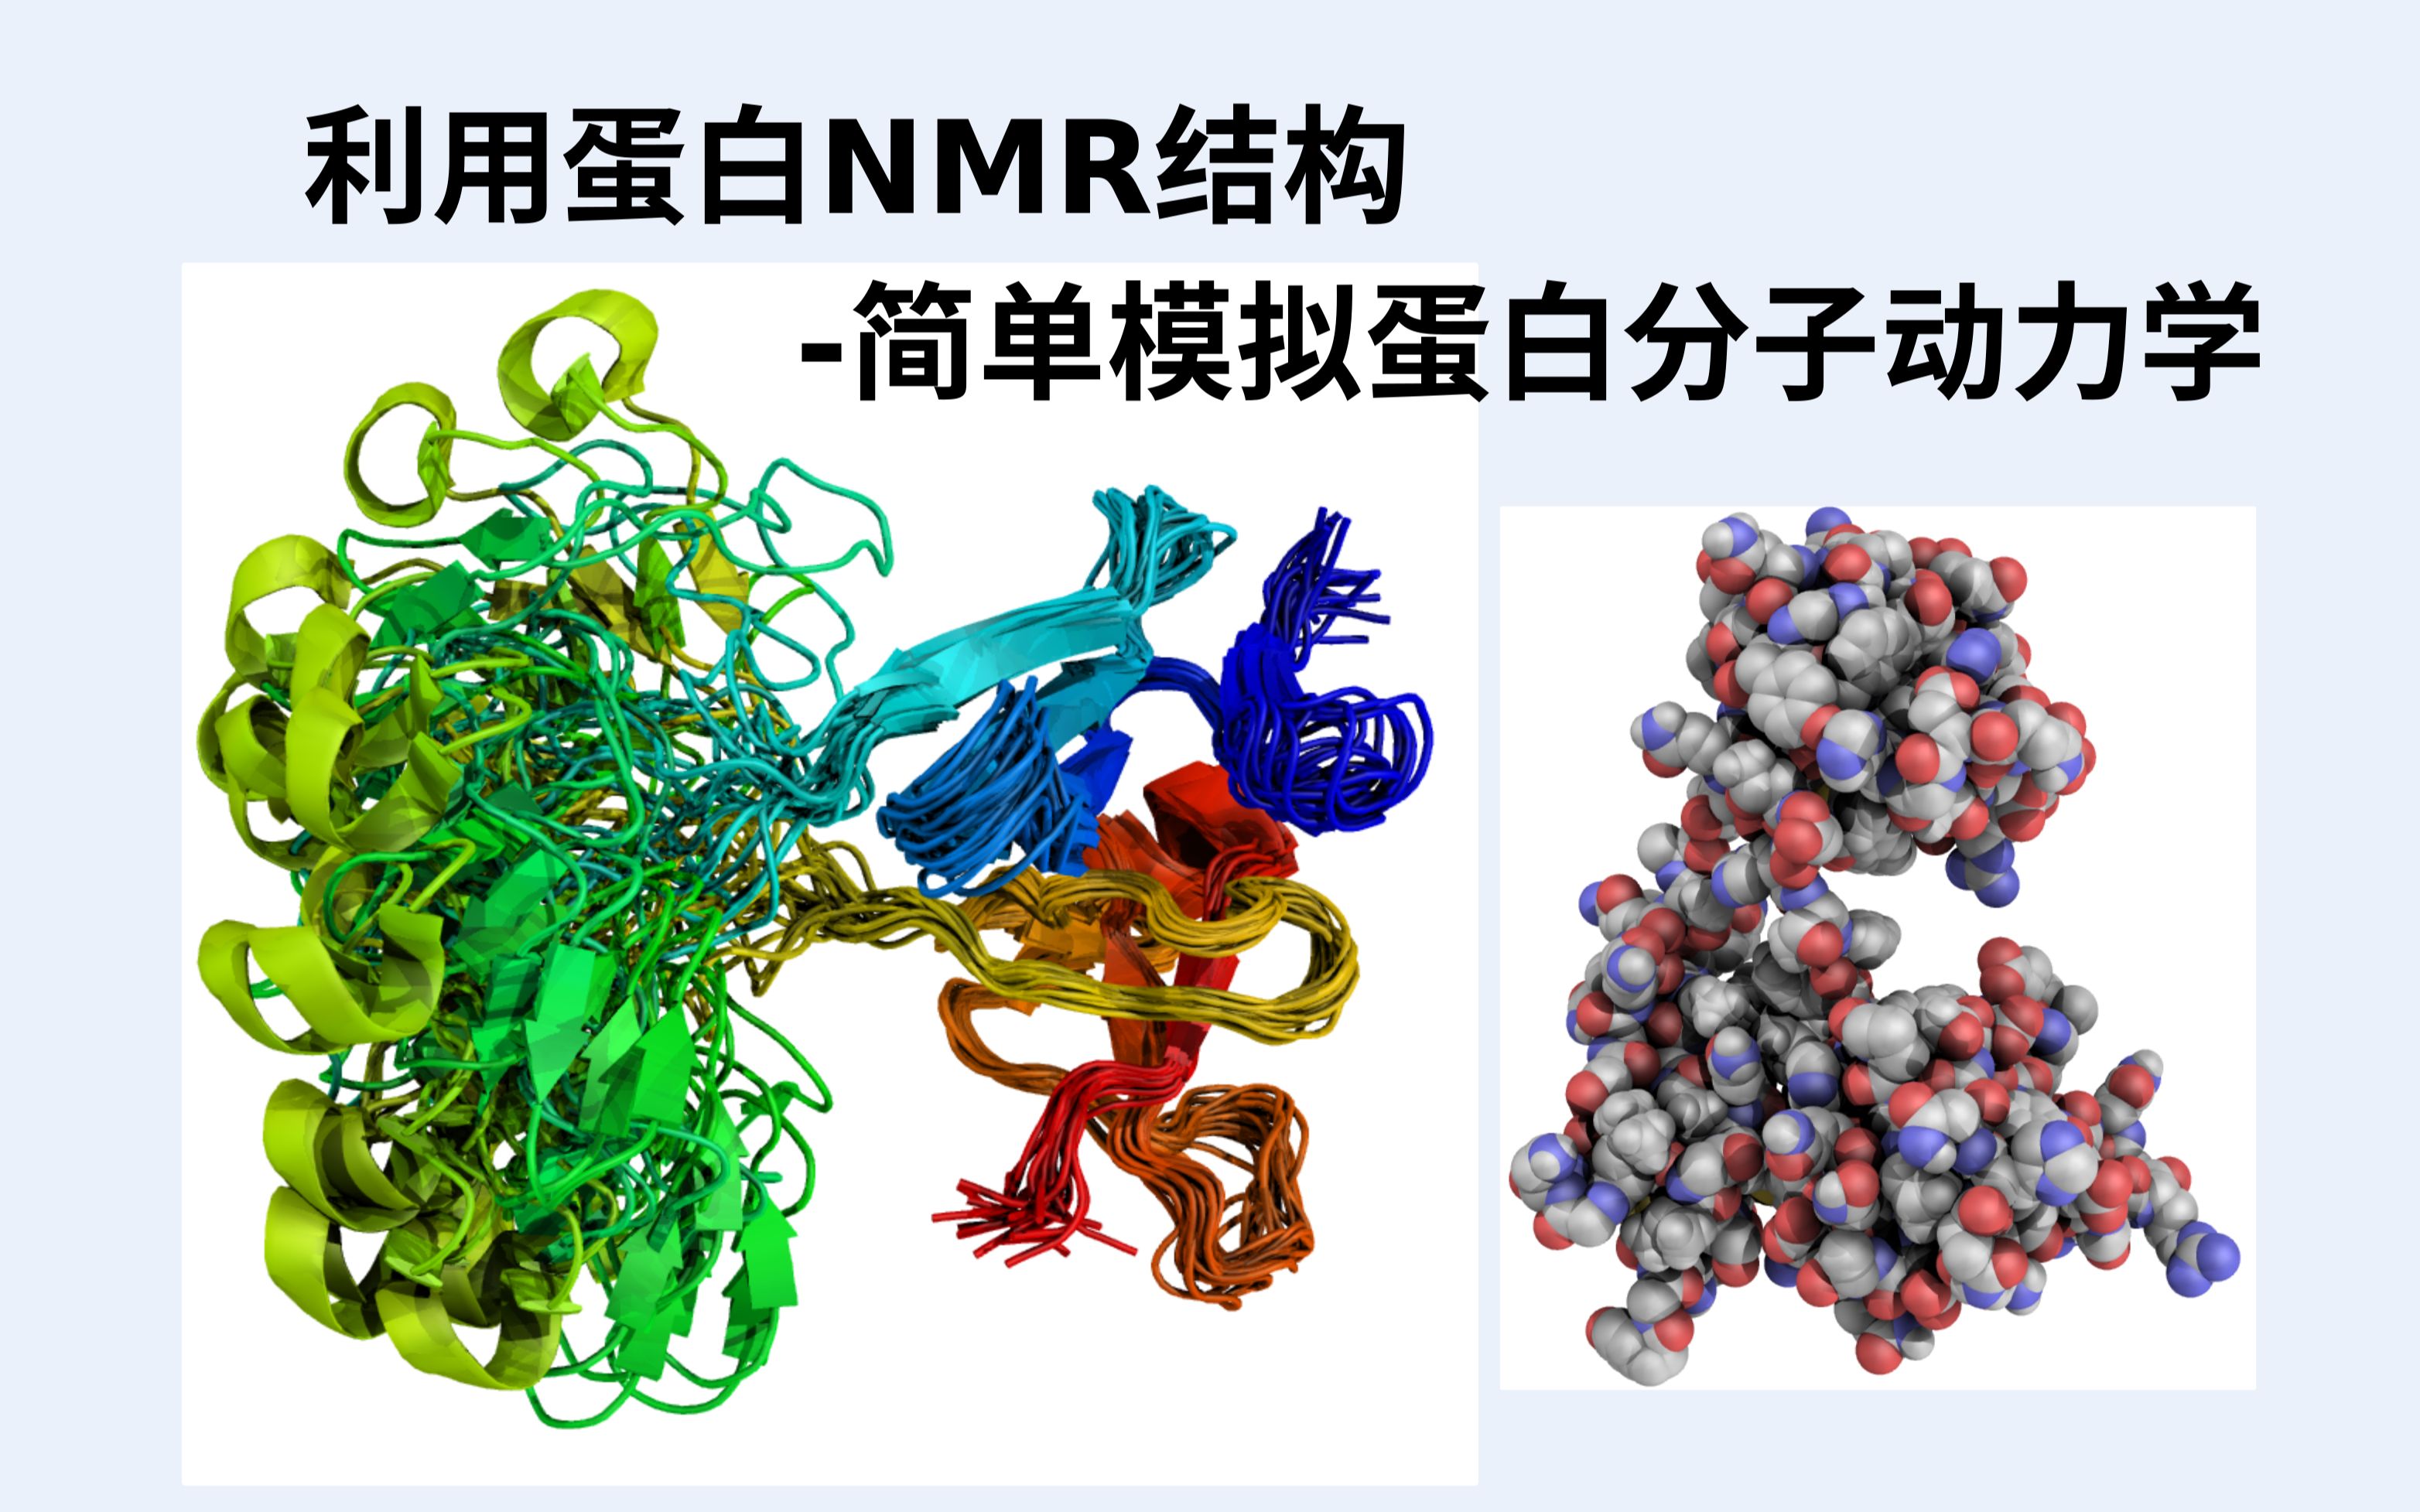 Protein & Cell∣揭示RNA结合蛋白RBM46调控减数分裂新机制-山东大学妇儿与生殖健康研究院